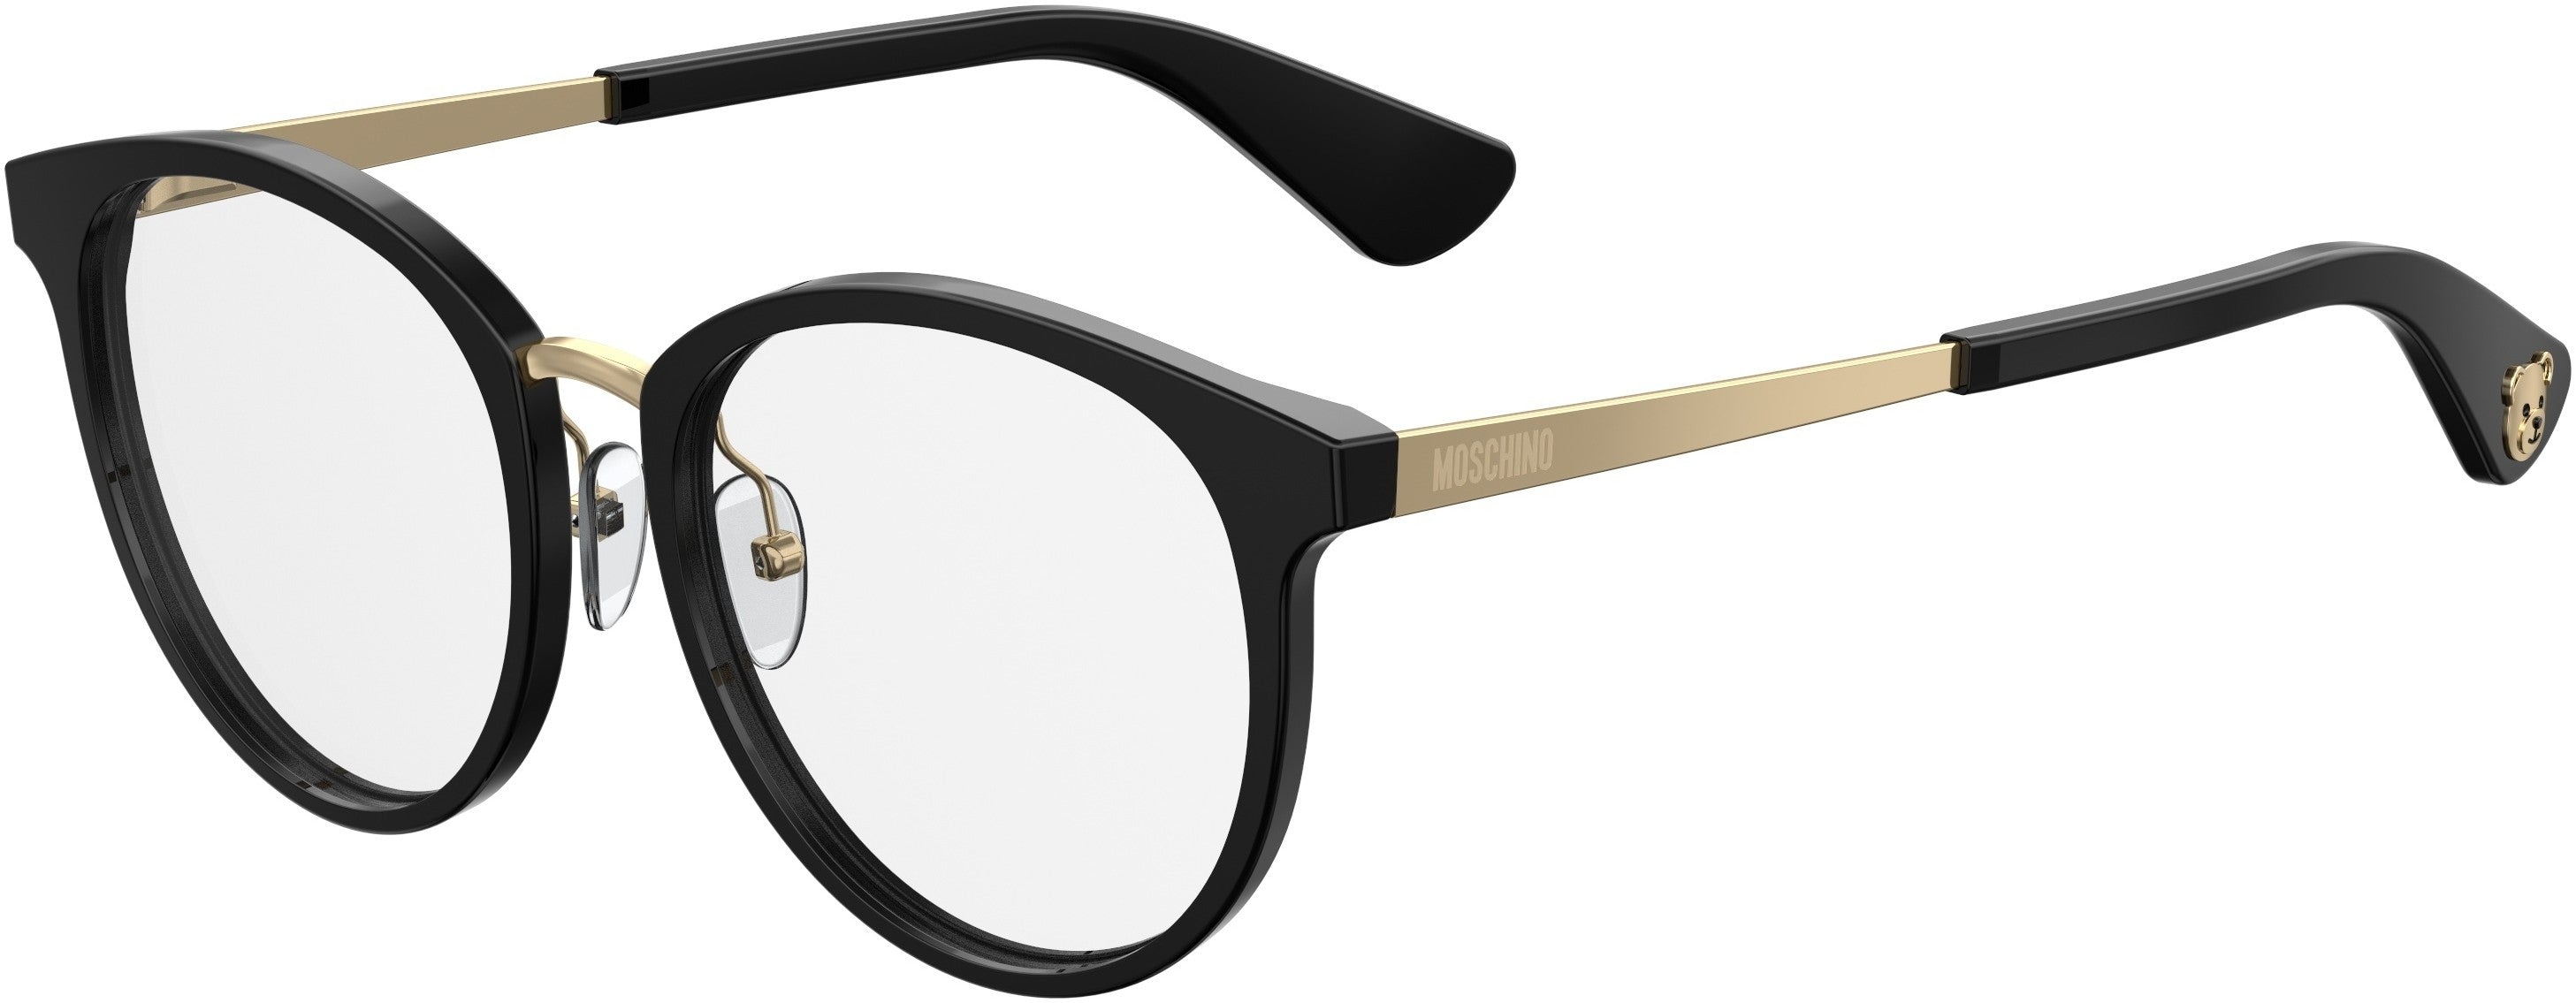  Moschino 507 Oval Modified Eyeglasses 0807-0807  Black (00 Demo Lens)